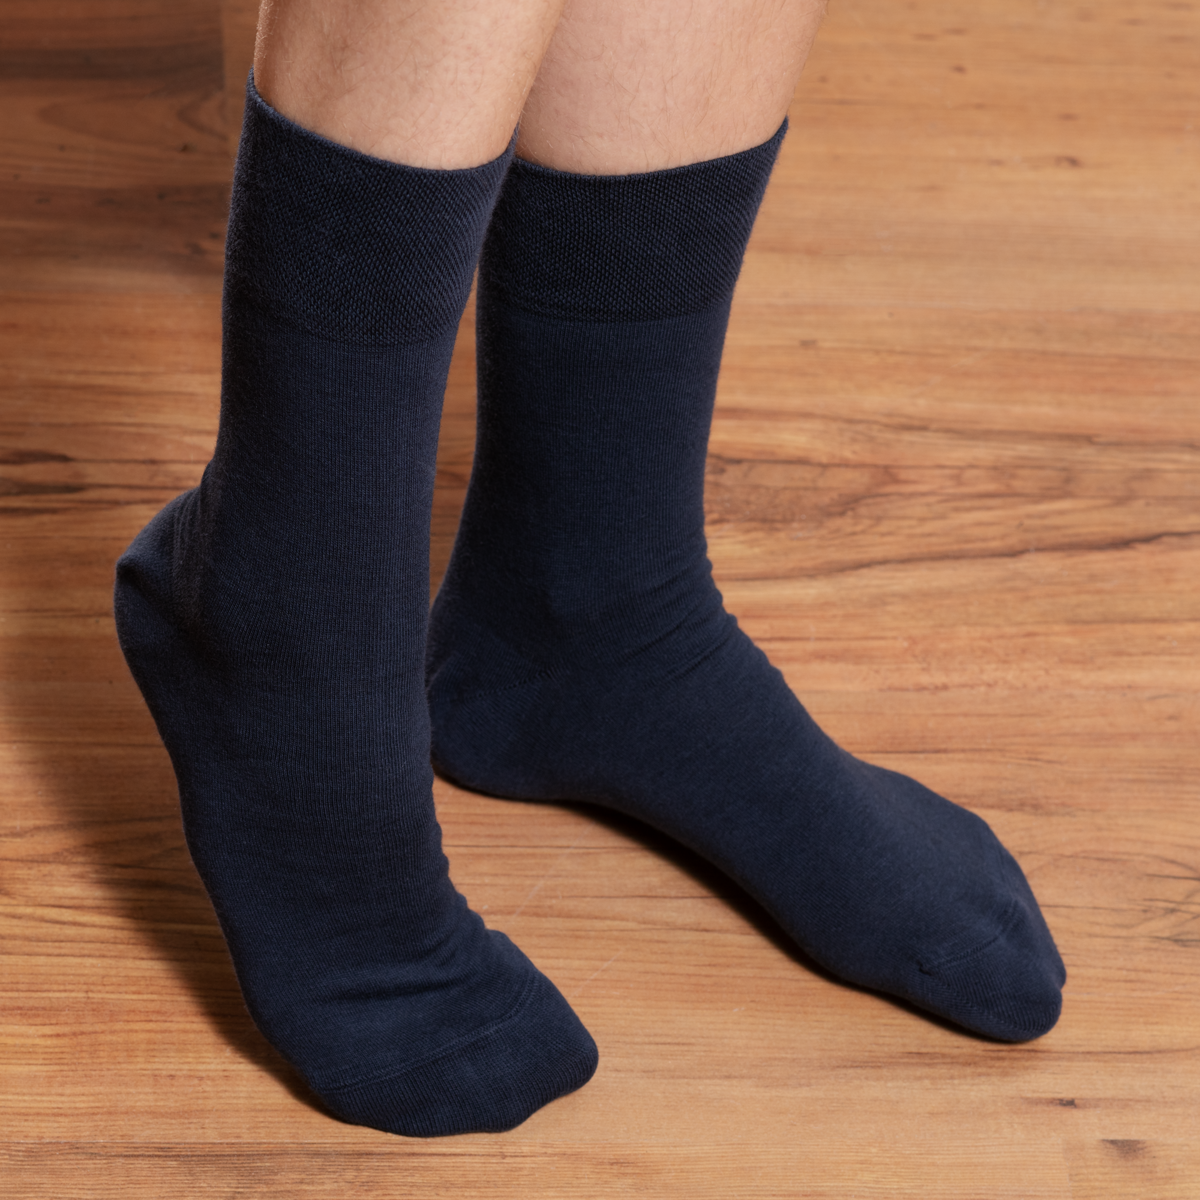 Multicolor Unisex Socks, Pack of 6